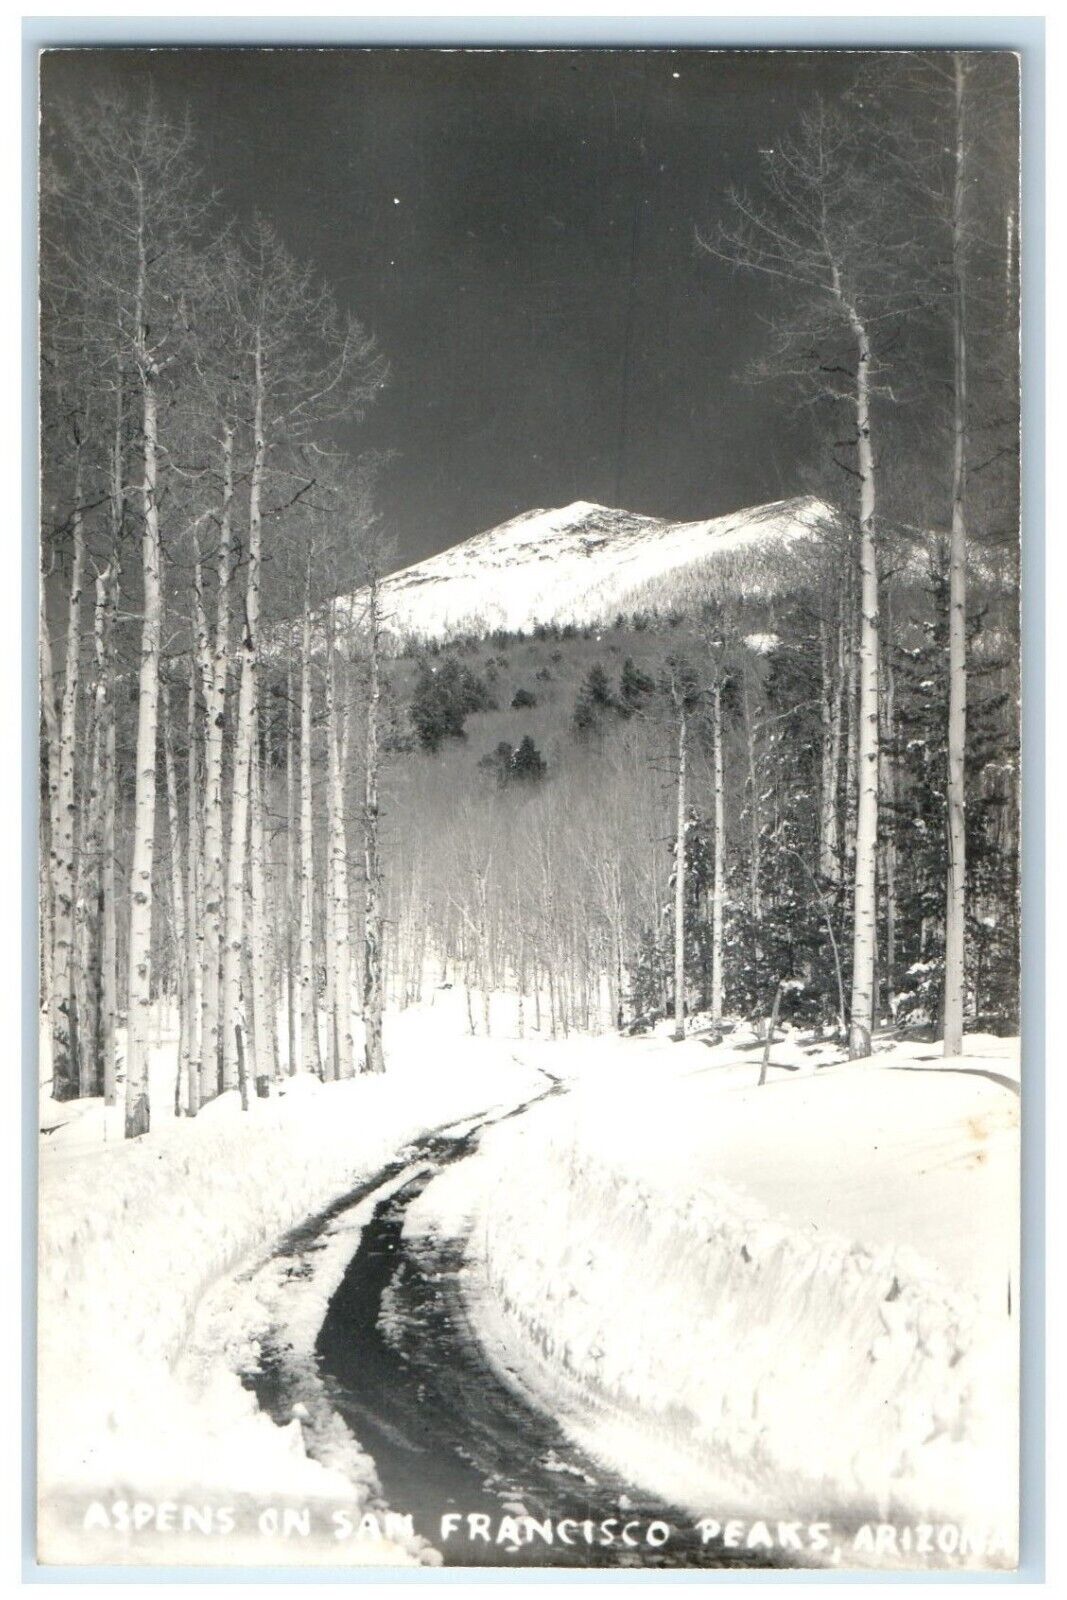 c1940's Aspens On San Francisco Peaks Arizona AZ RPPC Photo Vintage Postcard